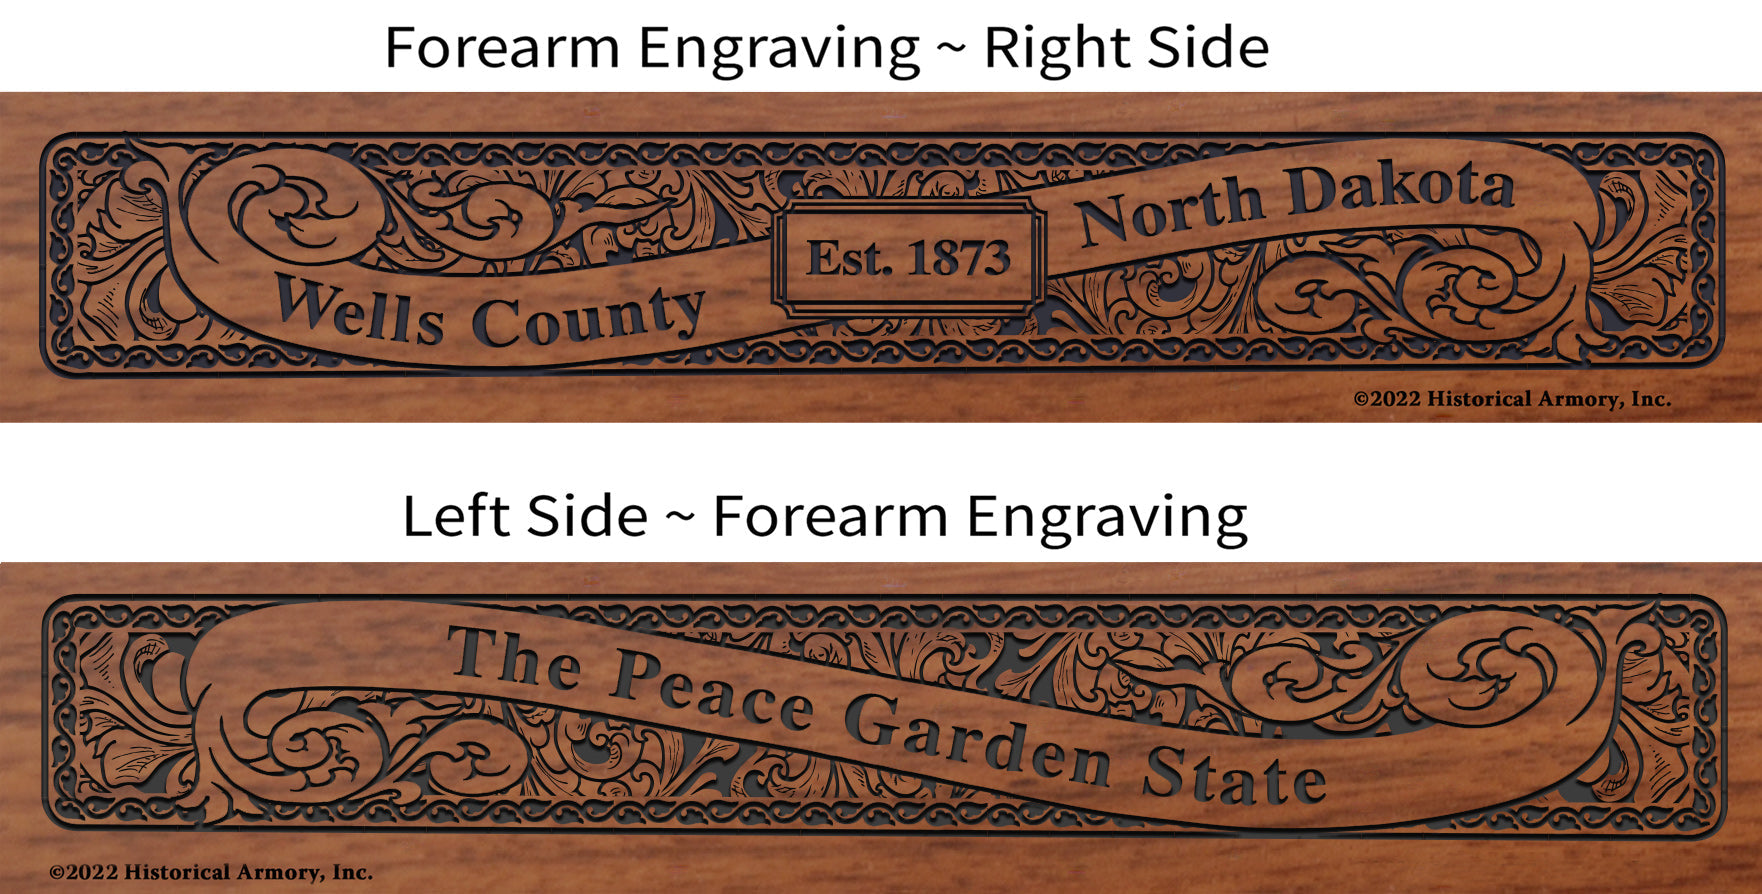 Wells County North Dakota Engraved Rifle Forearm